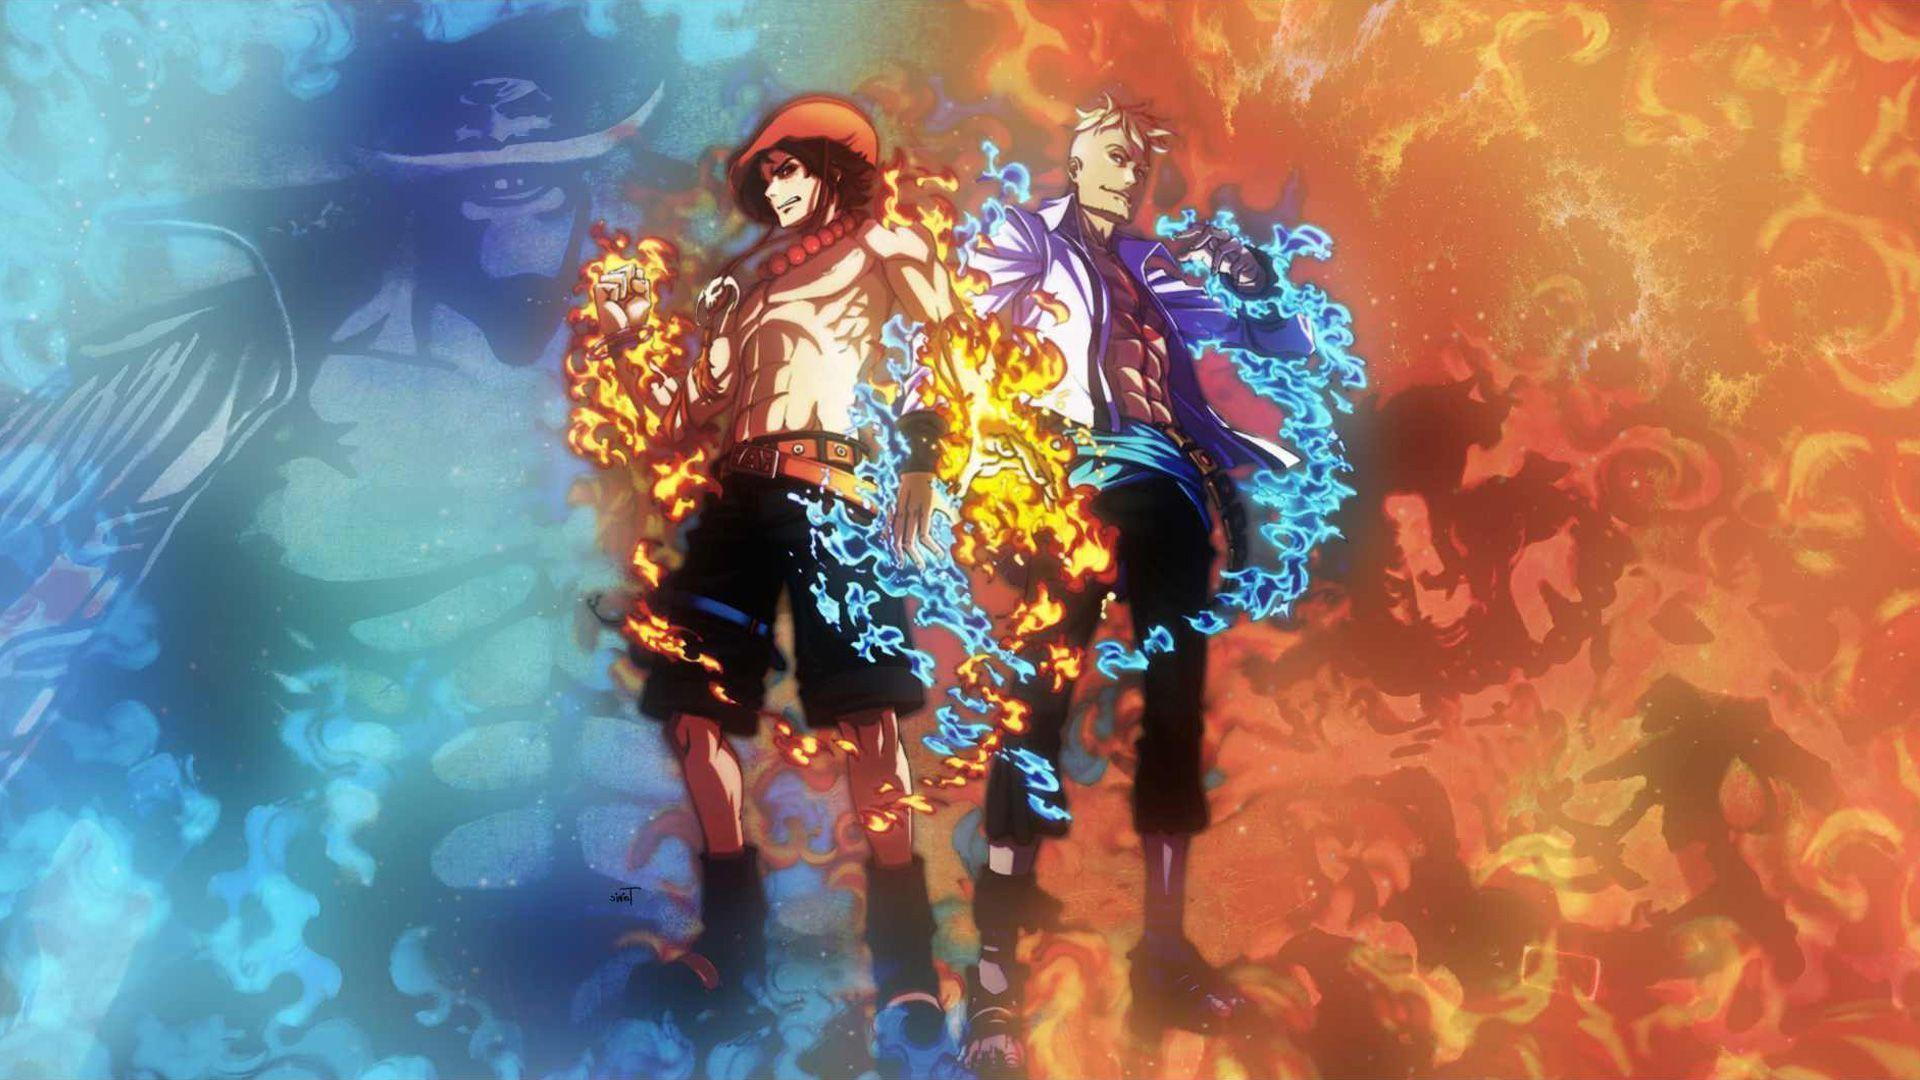 Portgas D. Ace Hd Wallpaper 4k Download Full Screen, Portgas D. Ace, Anime